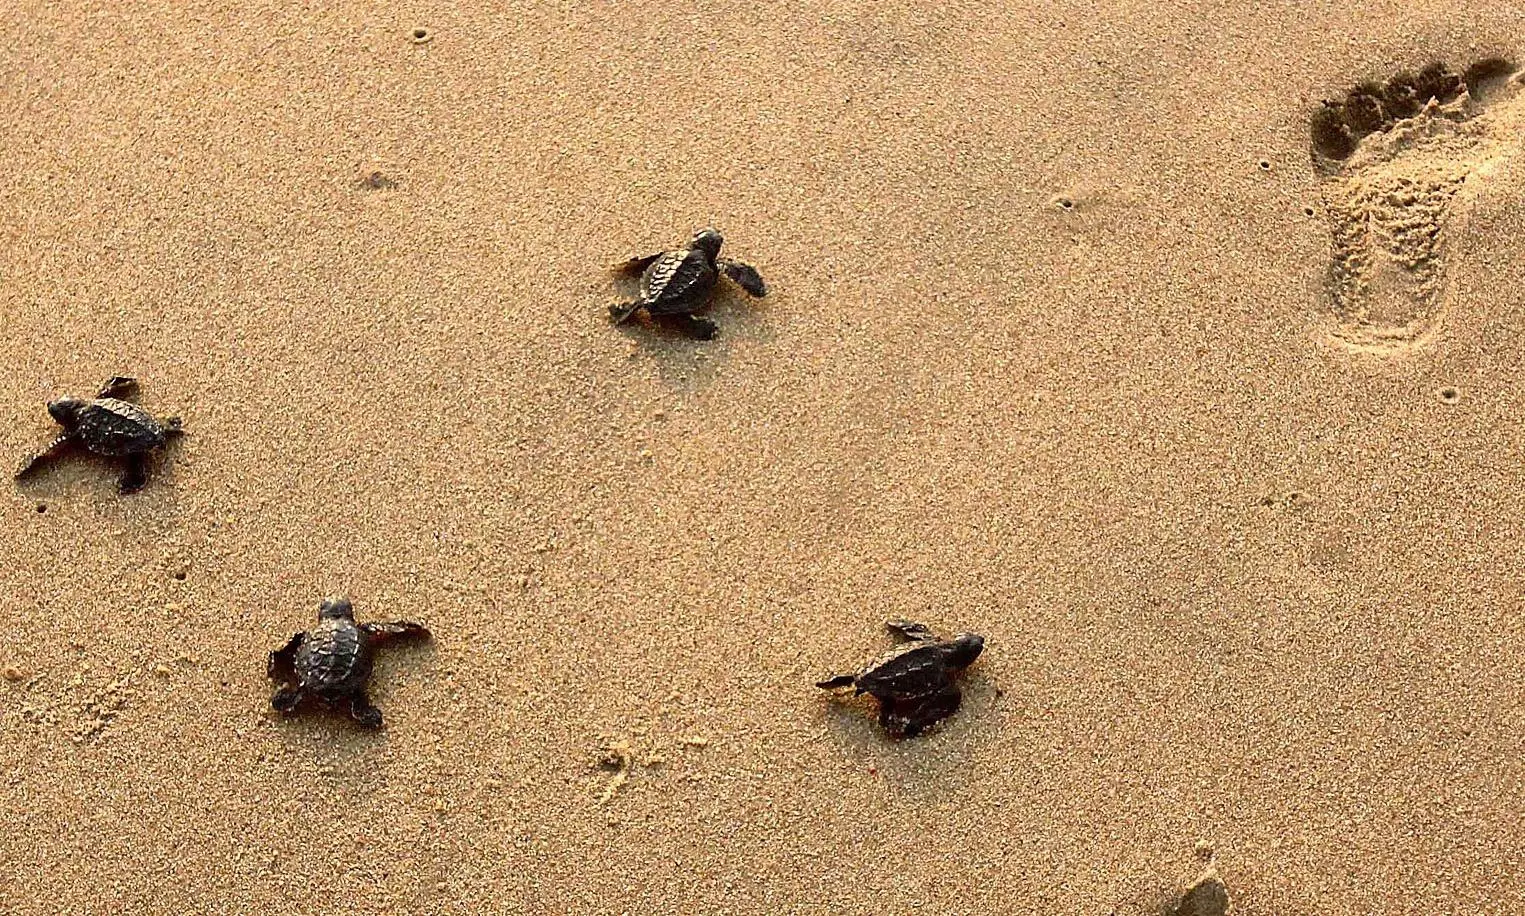 Dead Olive Ridley Turtles on Visakhapatnams RK Beach Spark Concerns